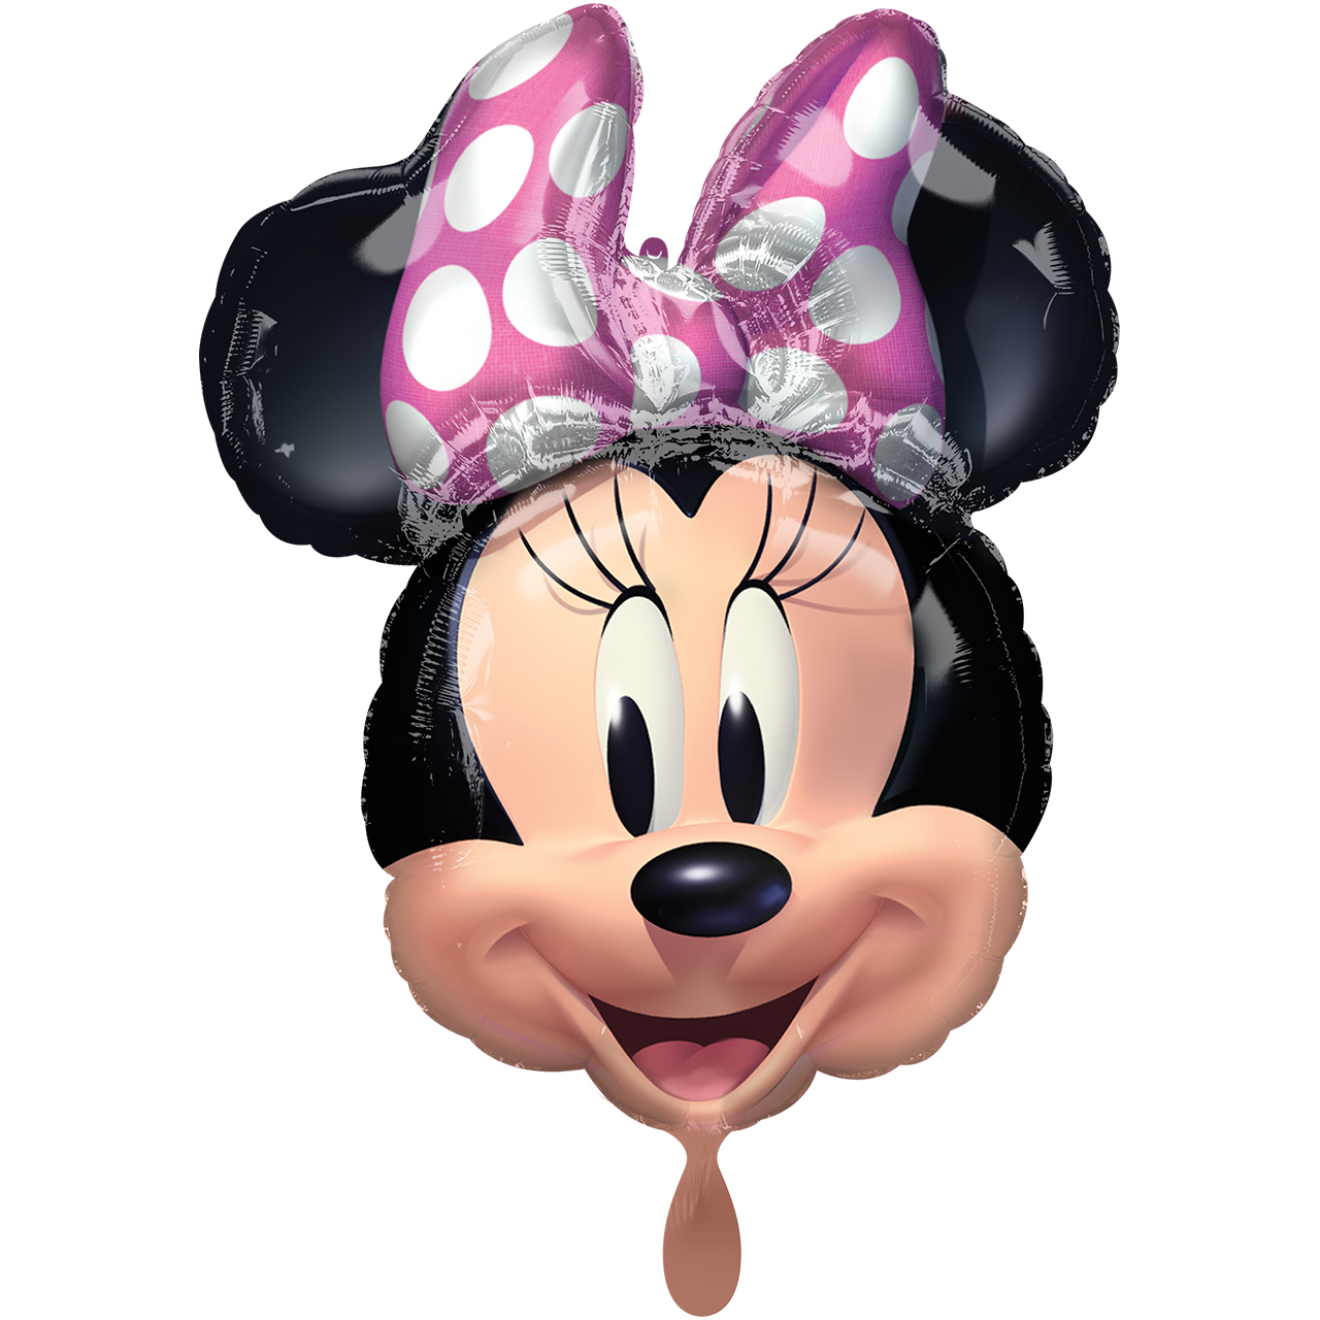 1 Balloon XXL - Minnie Mouse Forever